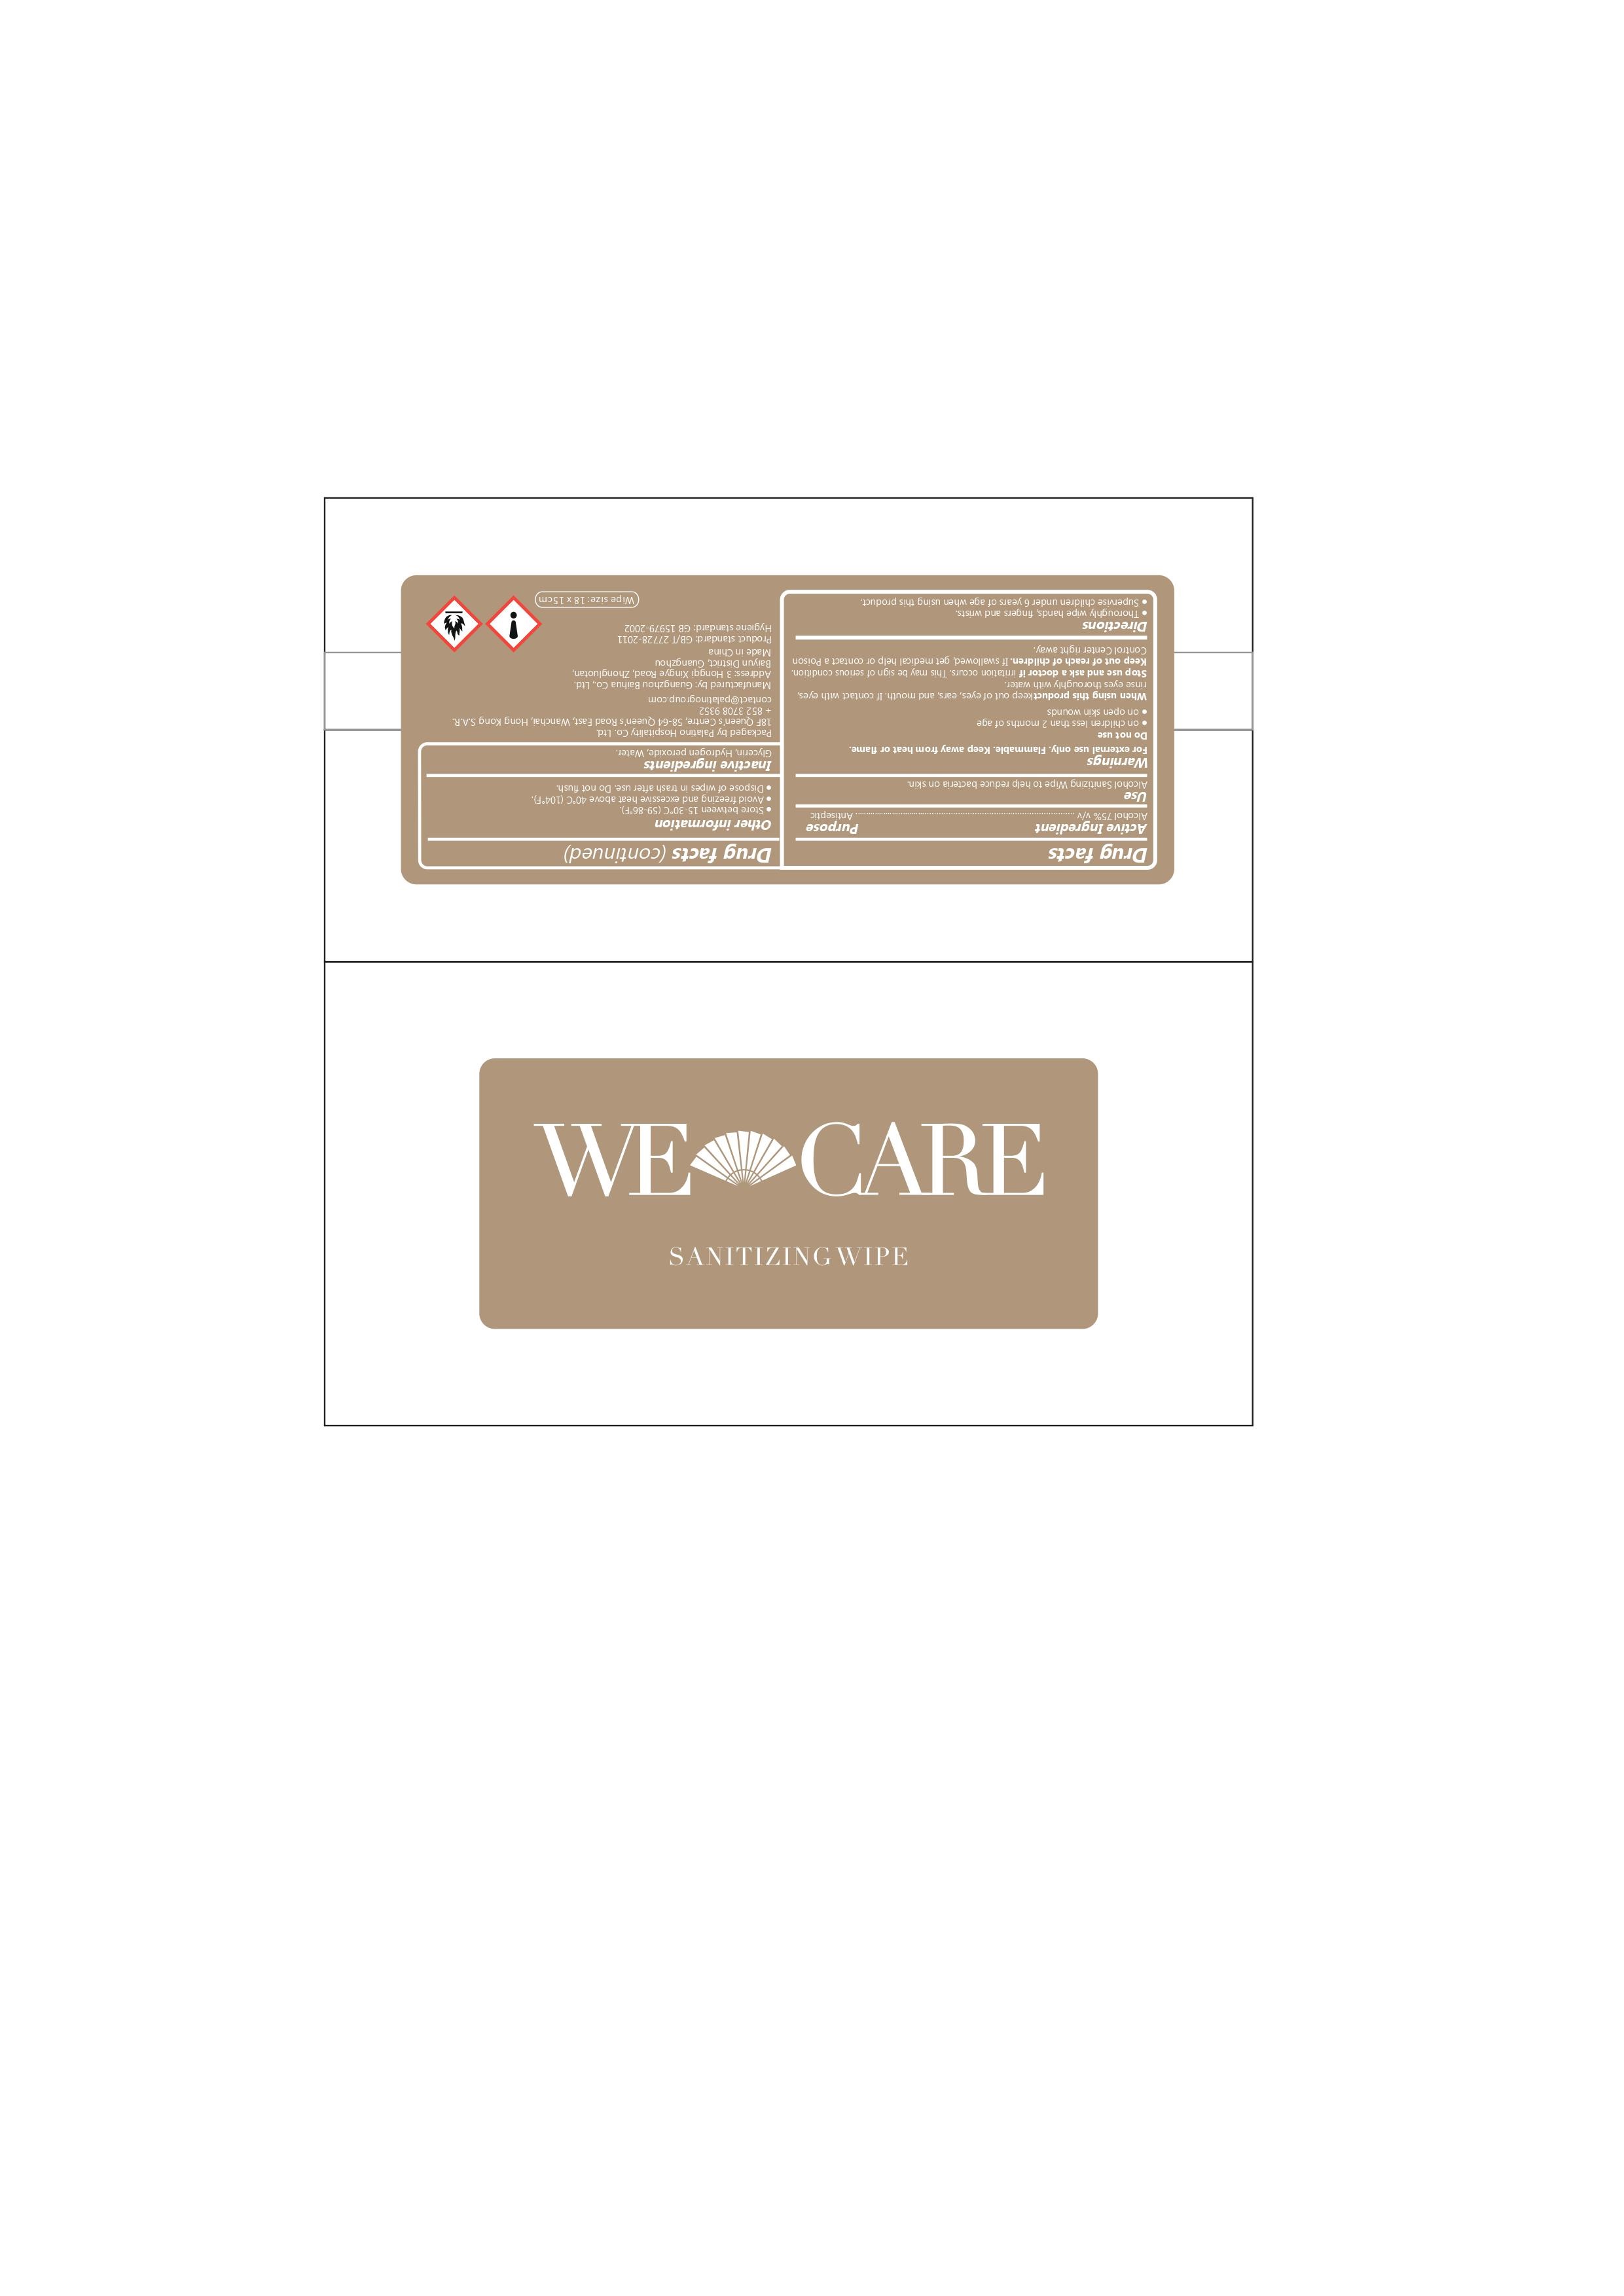 WE CARE Sanitizing Wipe 1pc Label